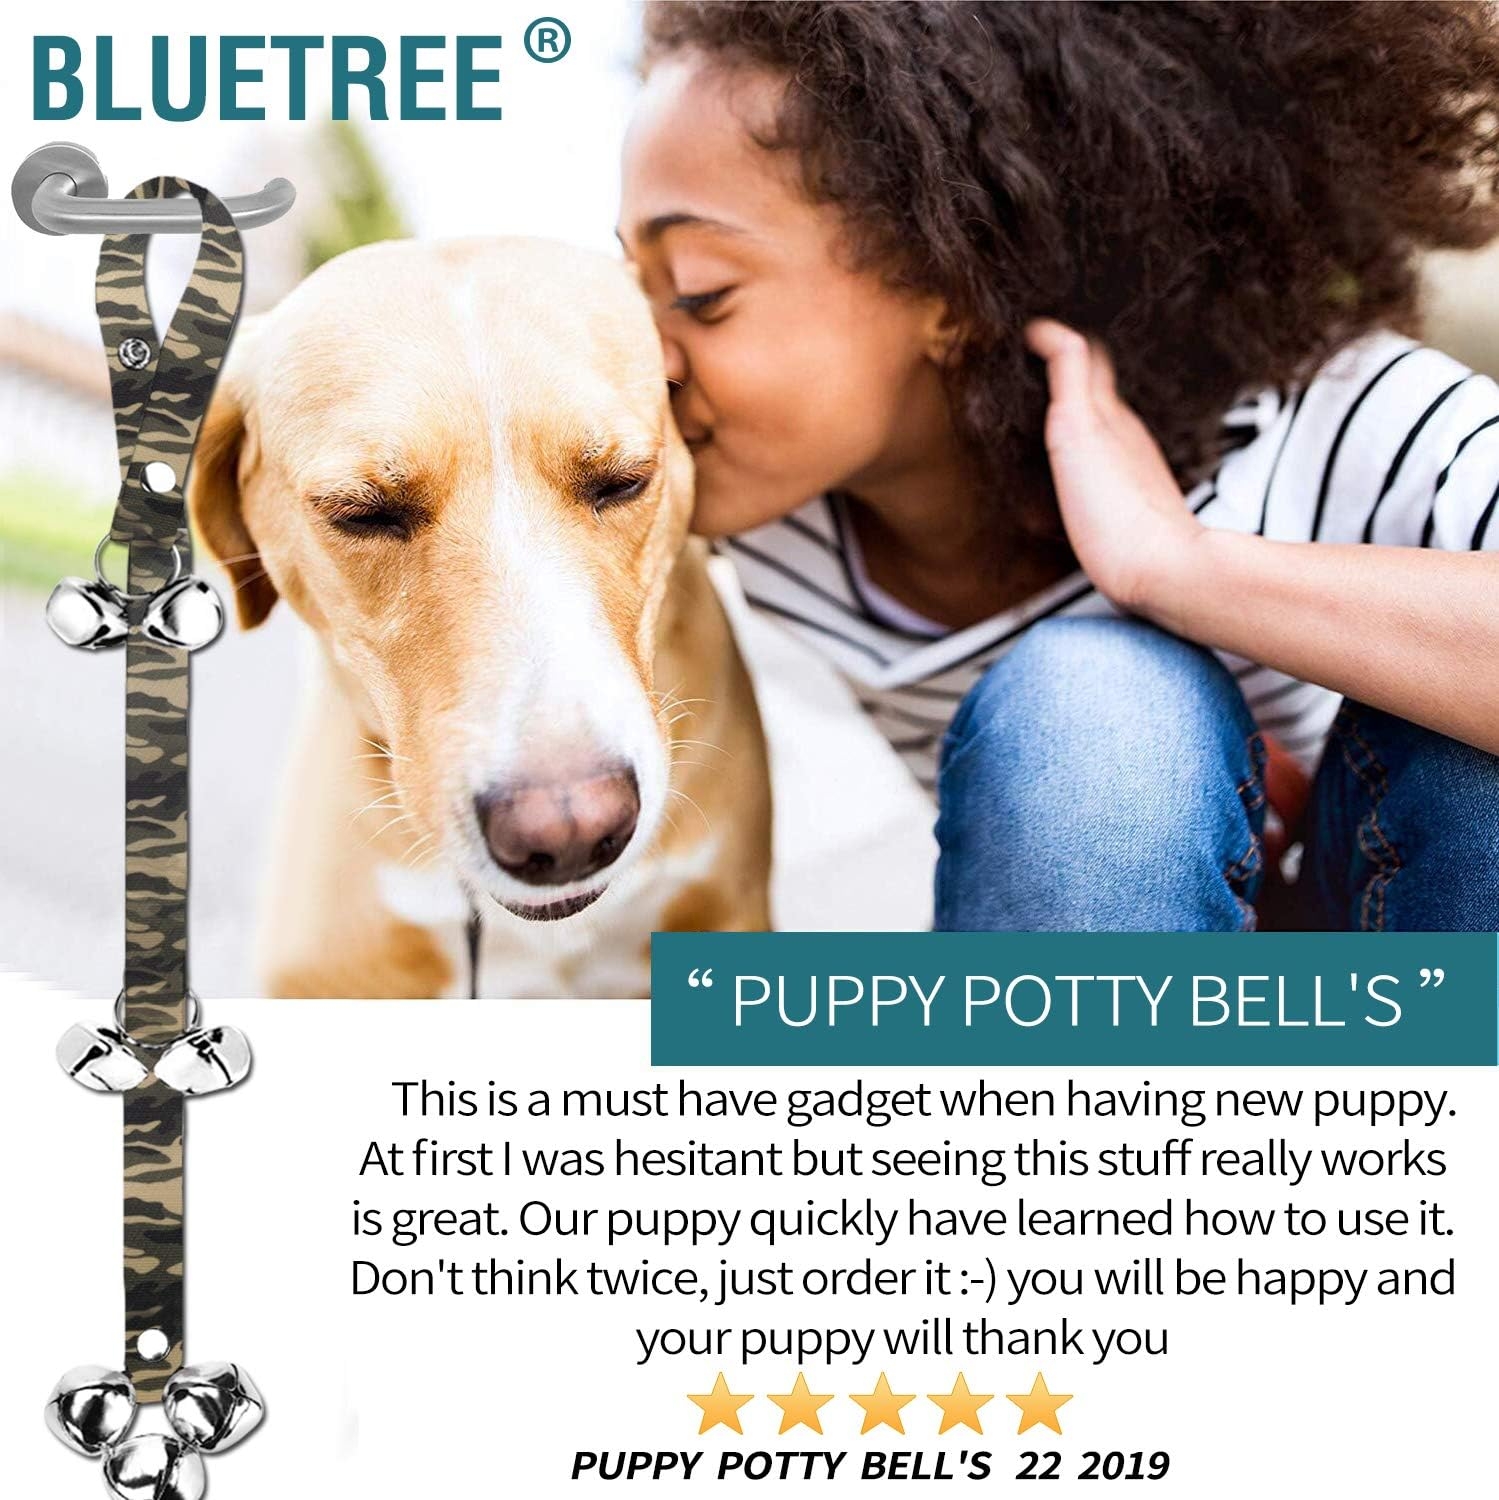 2 Pack Dog Doorbells Premium Quality Training Potty Great Dog Bells Adjustable Door Bell Dog Bells for Potty Training Your Puppy The Easy Way - Premium Quality - 7 Extra Large Loud 1.4 DoorBells